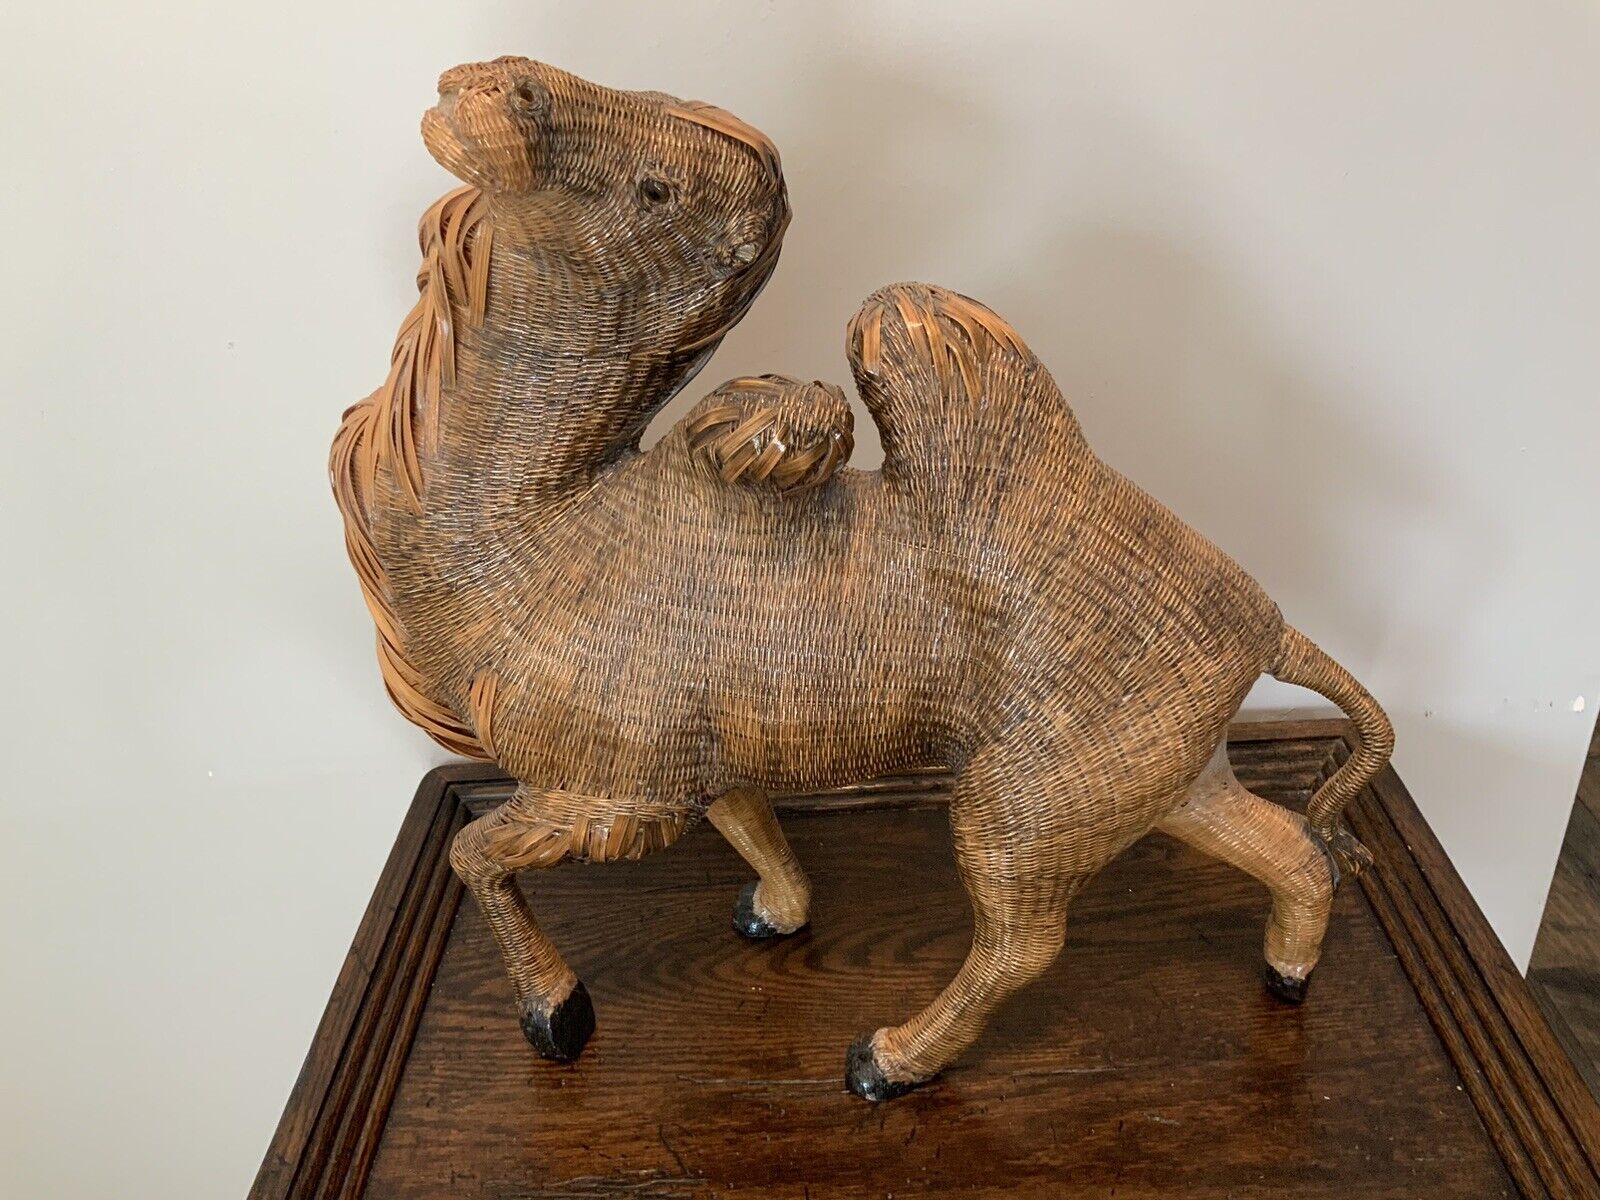 Vintage Shanghai Handicrafts Camel Woven Basket Style Sculpture Figure 15.5”